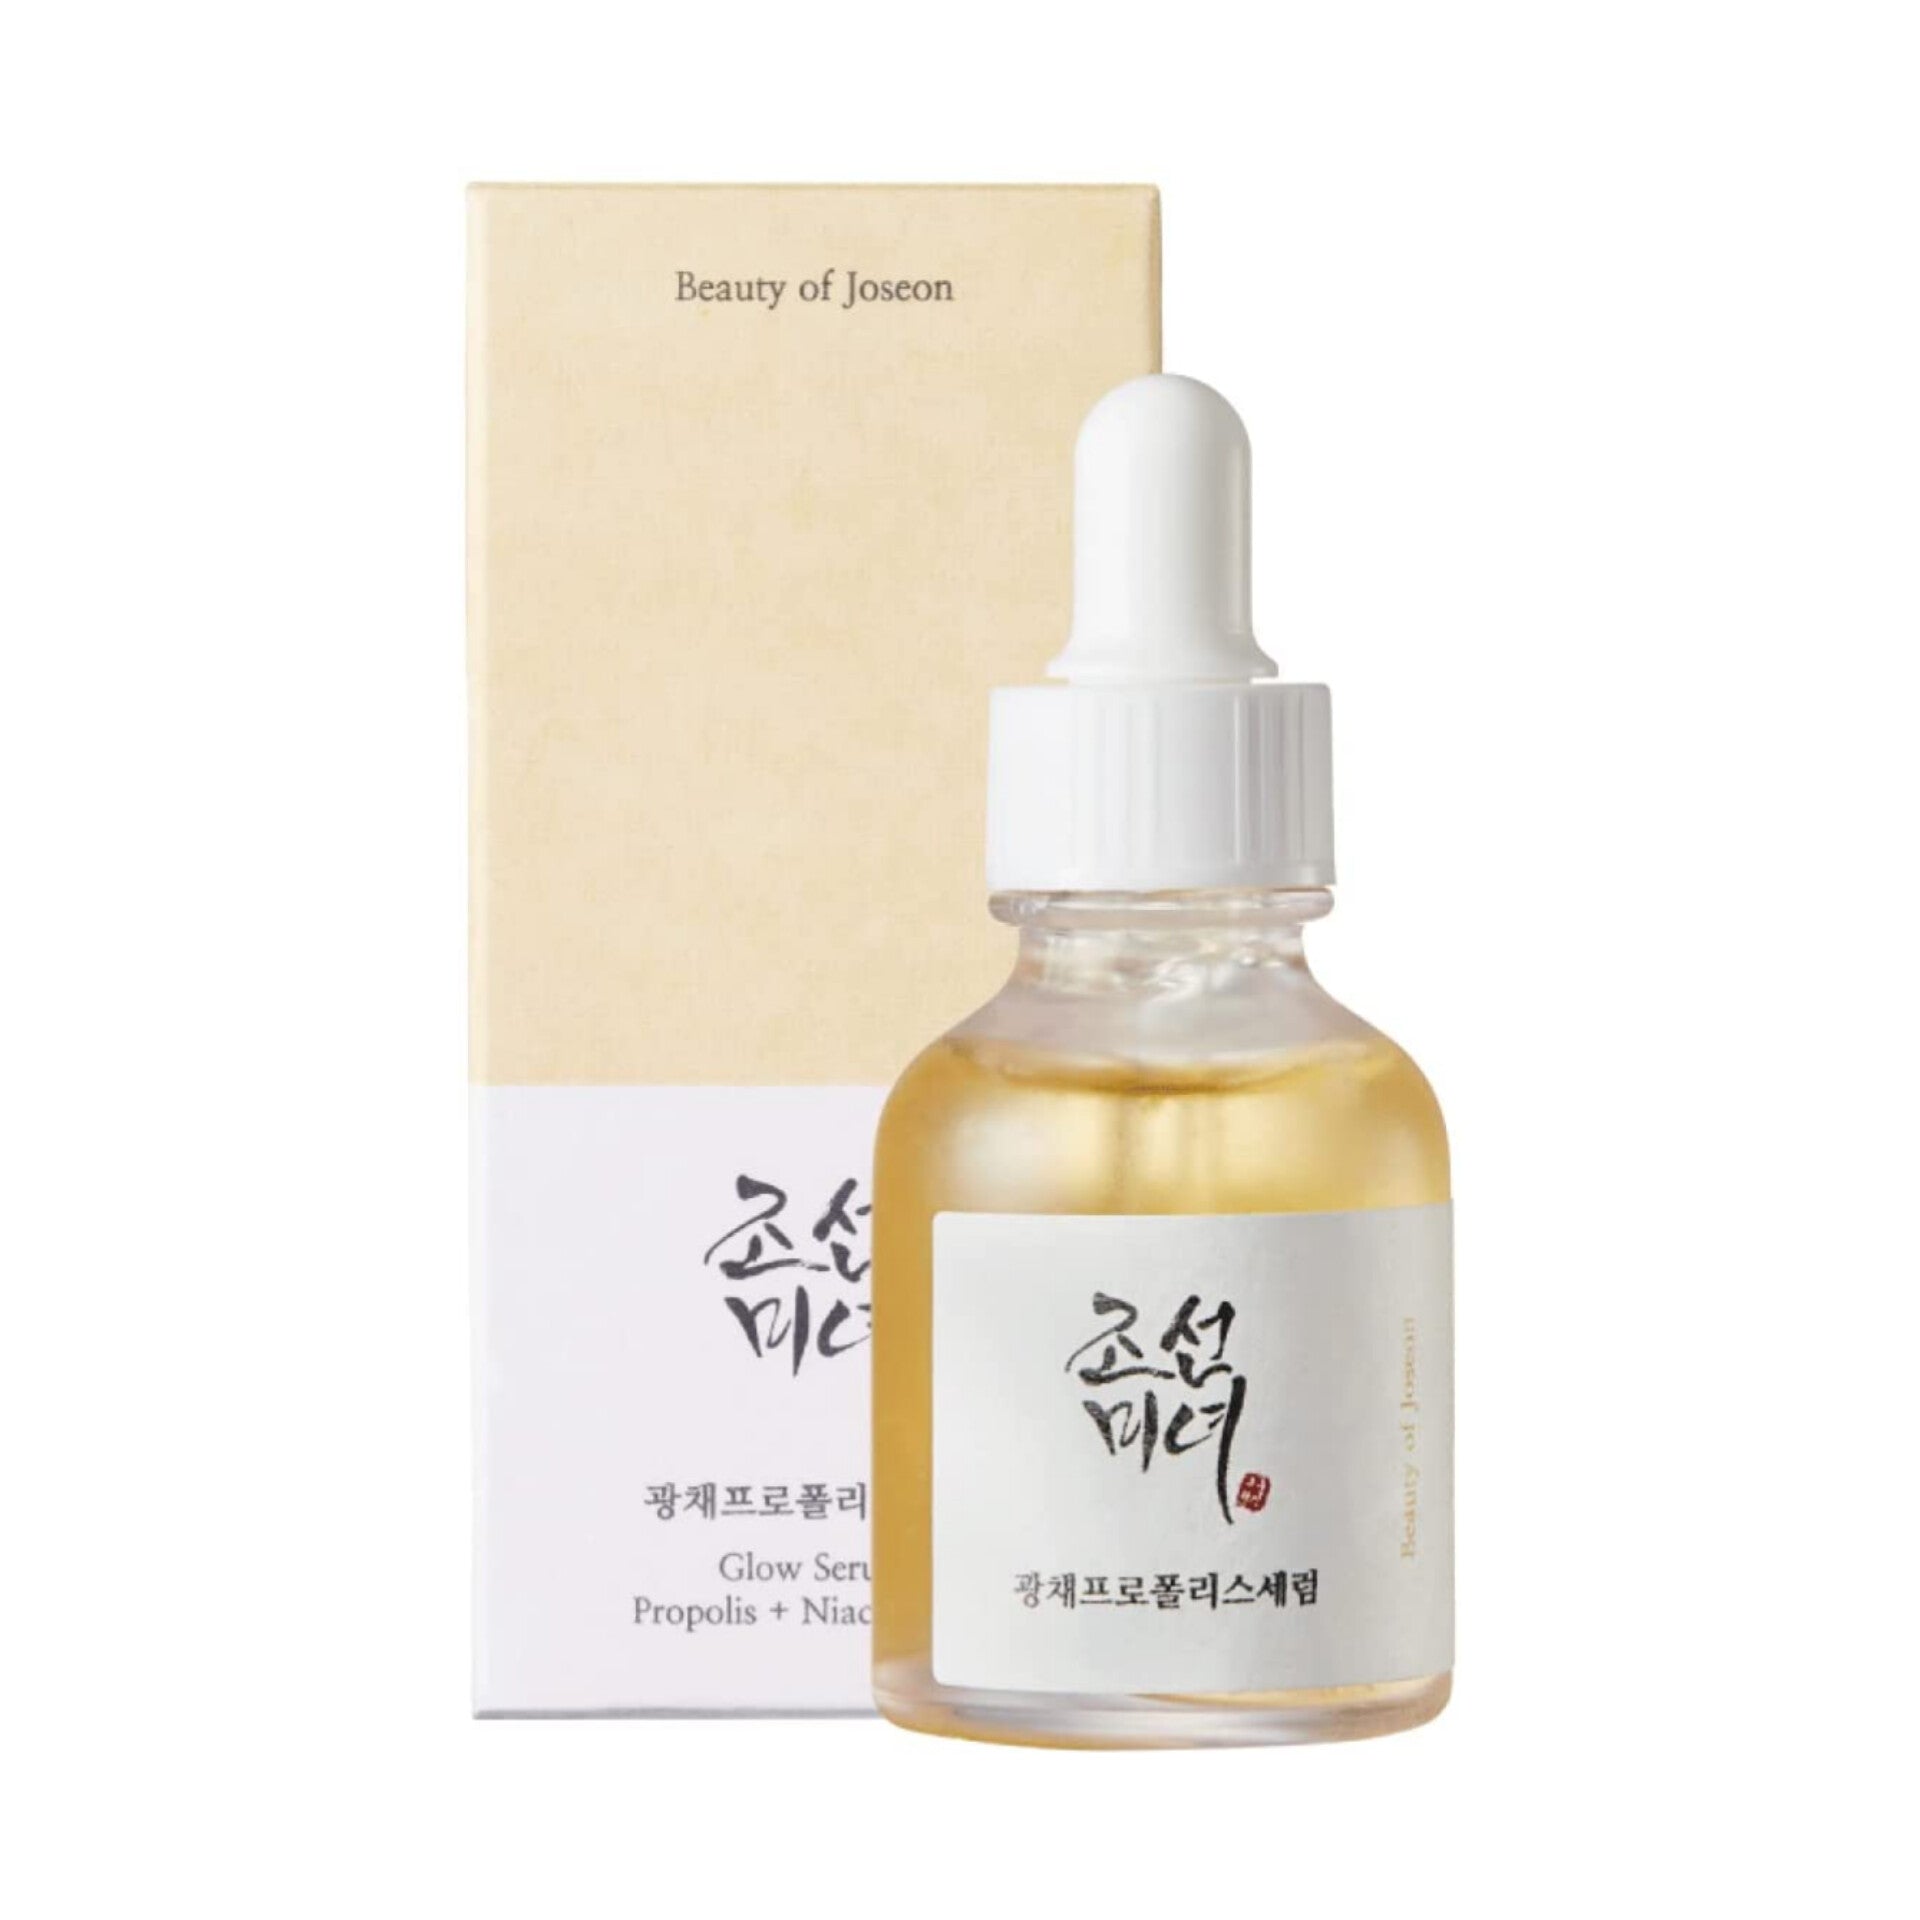 beauty-of-joseon-serum-eclat-propolis-niacinamide-30ml